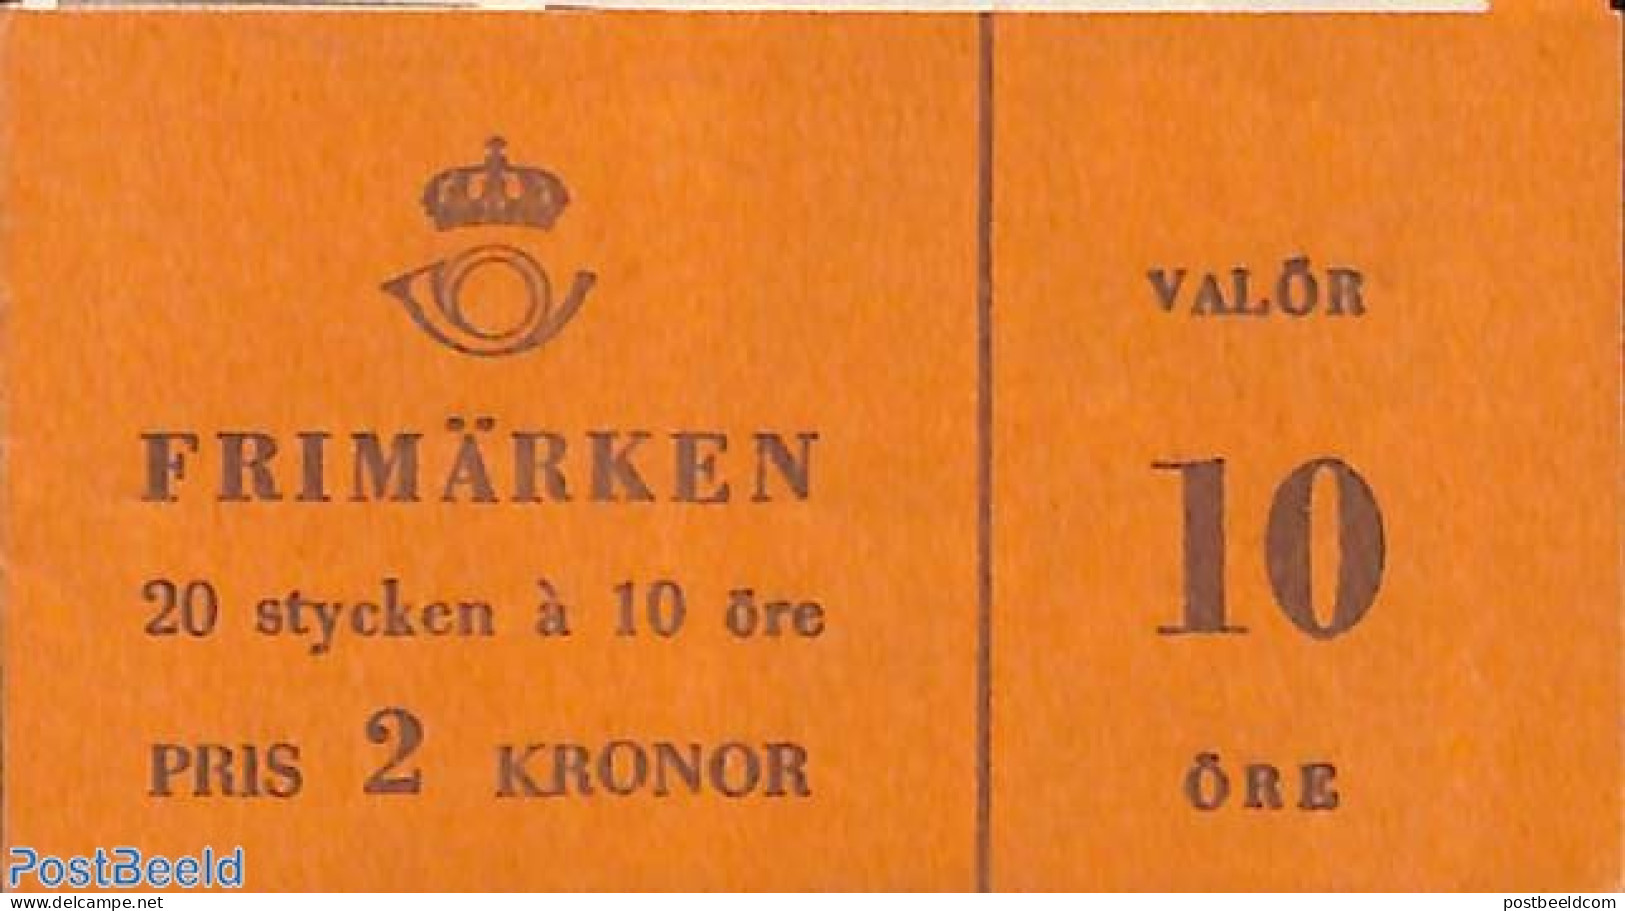 Sweden 1954 20x 10ö Booklet, Mint NH, Stamp Booklets - Ongebruikt